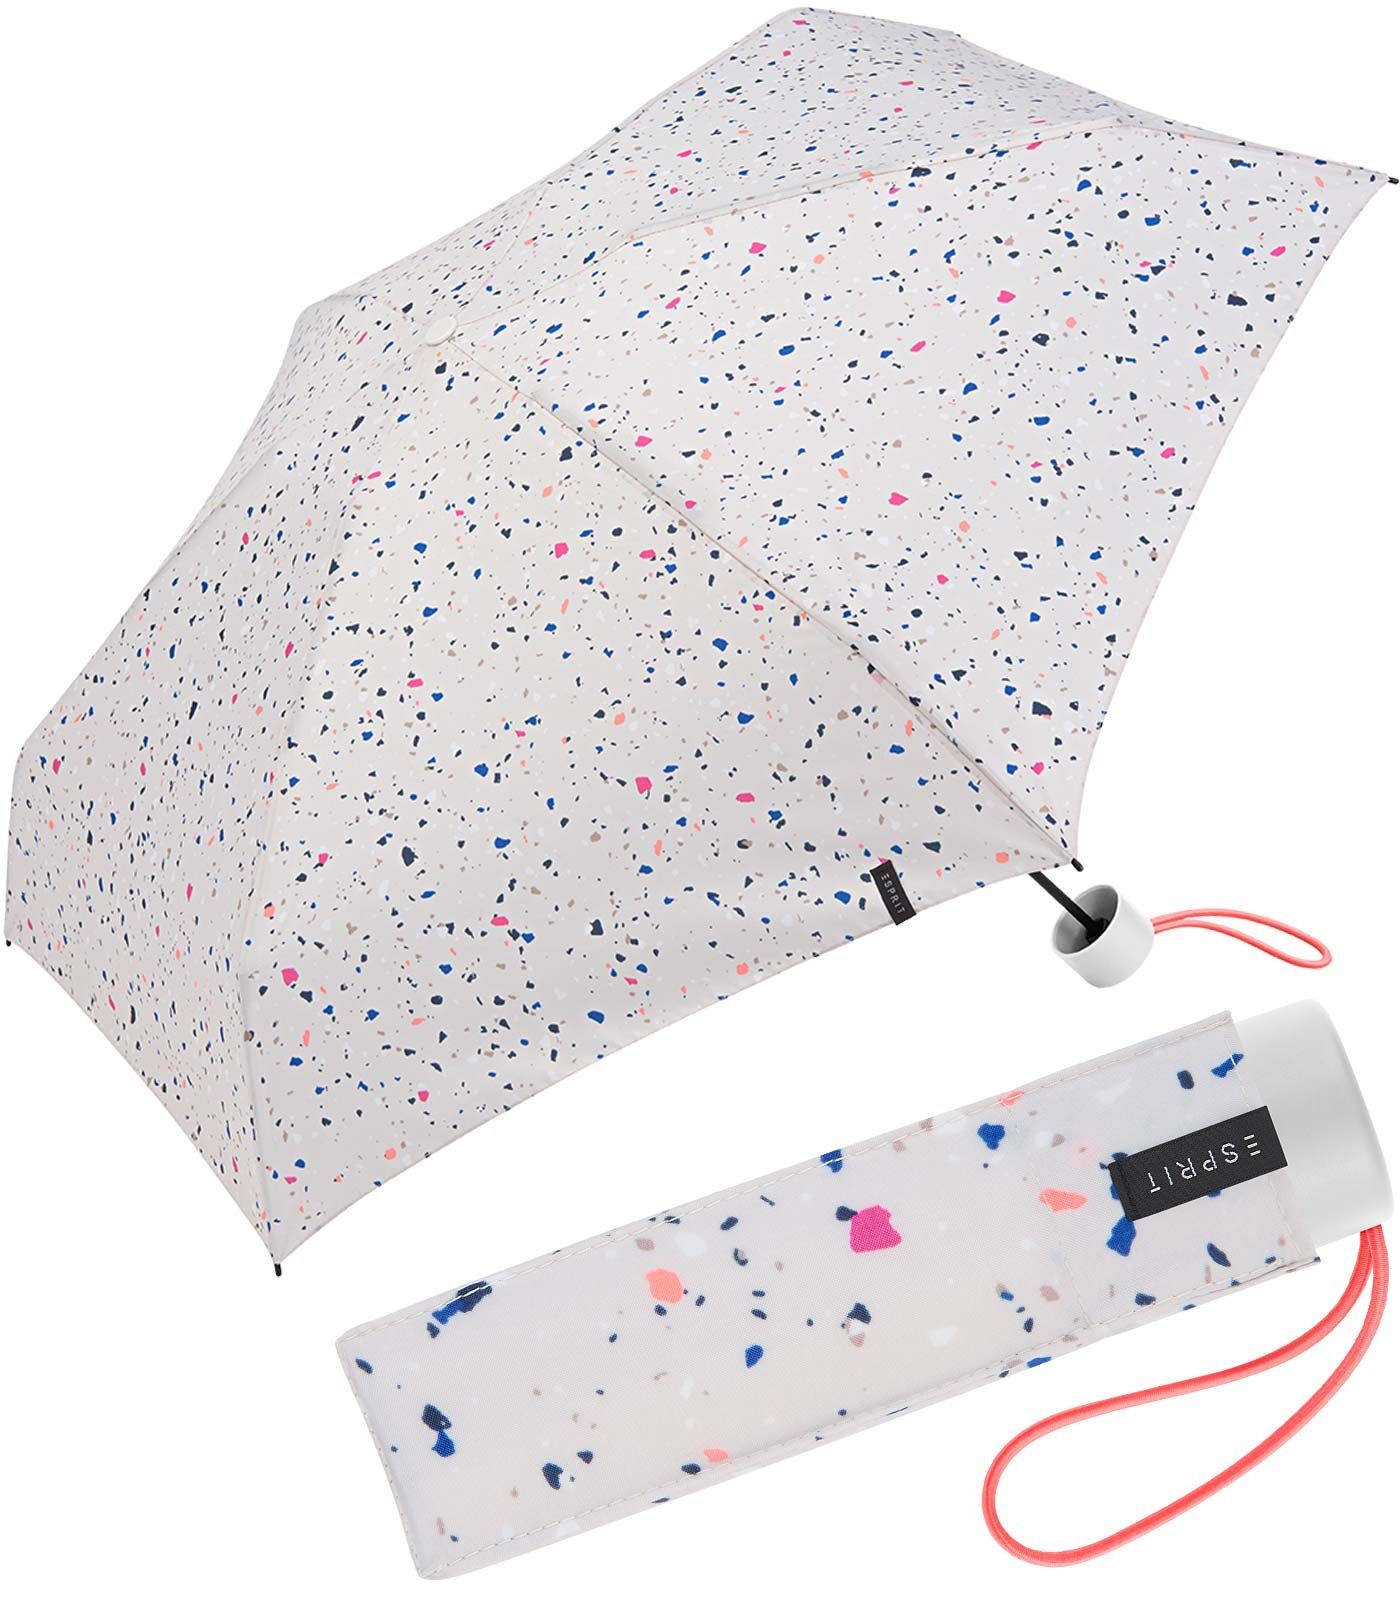 Esprit Taschenregenschirm Mini Regenschirm Petito - Terrazzo Dots - weiß, winzig klein, in den neuen Trendfarben